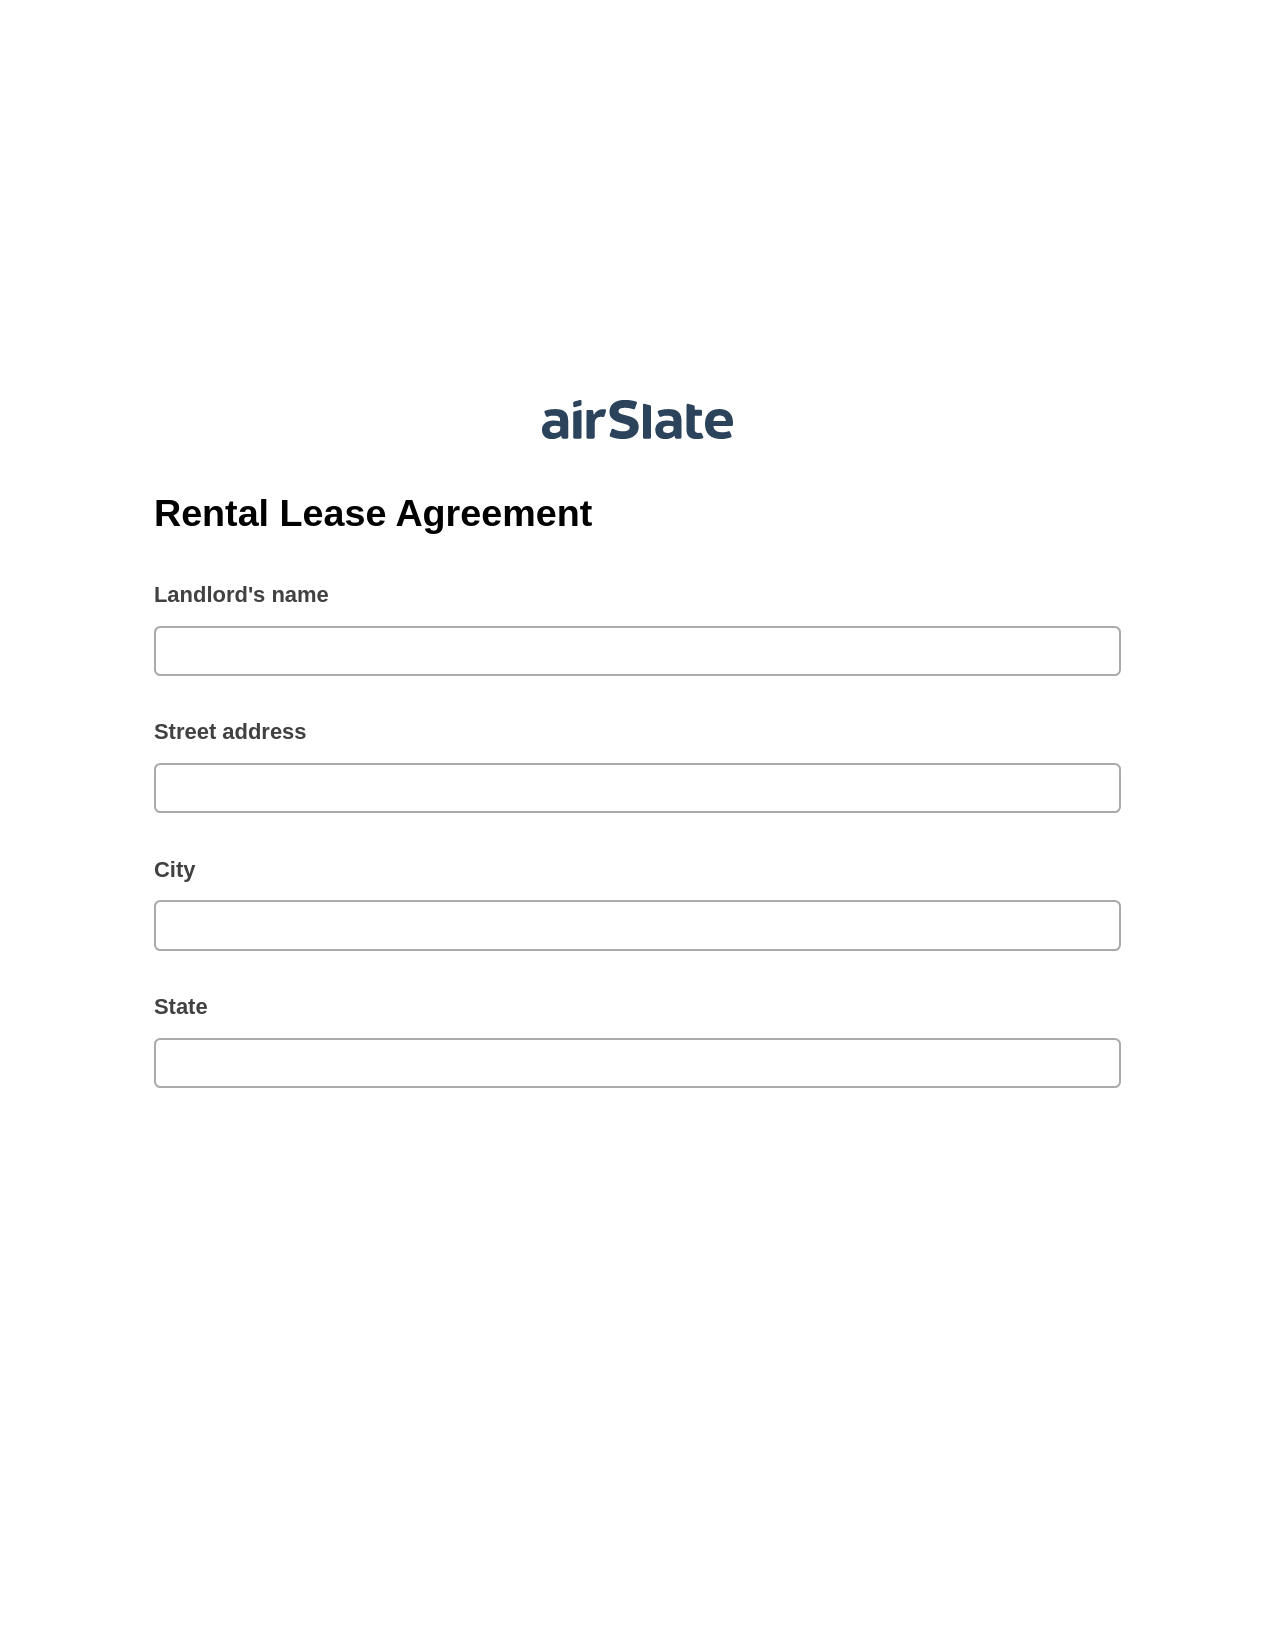 Rental Lease Agreement Pre-fill from Google Sheet Dropdown Options Bot, Google Cloud Print Bot, Slack Notification Postfinish Bot